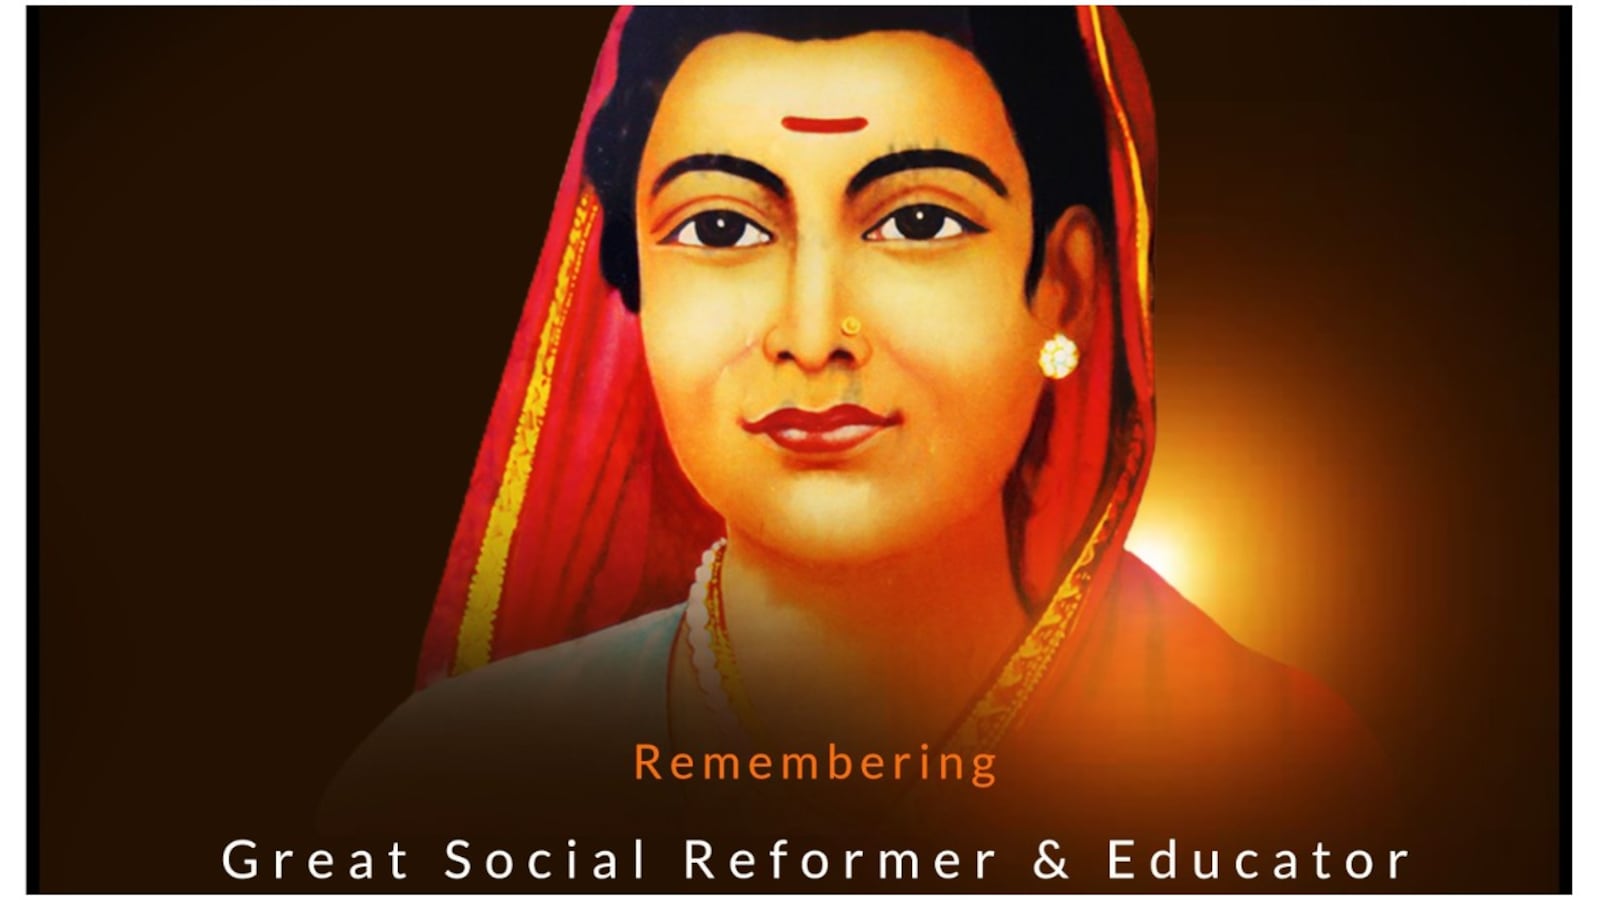 Savitribai Phule: Remembering India's first woman teacher